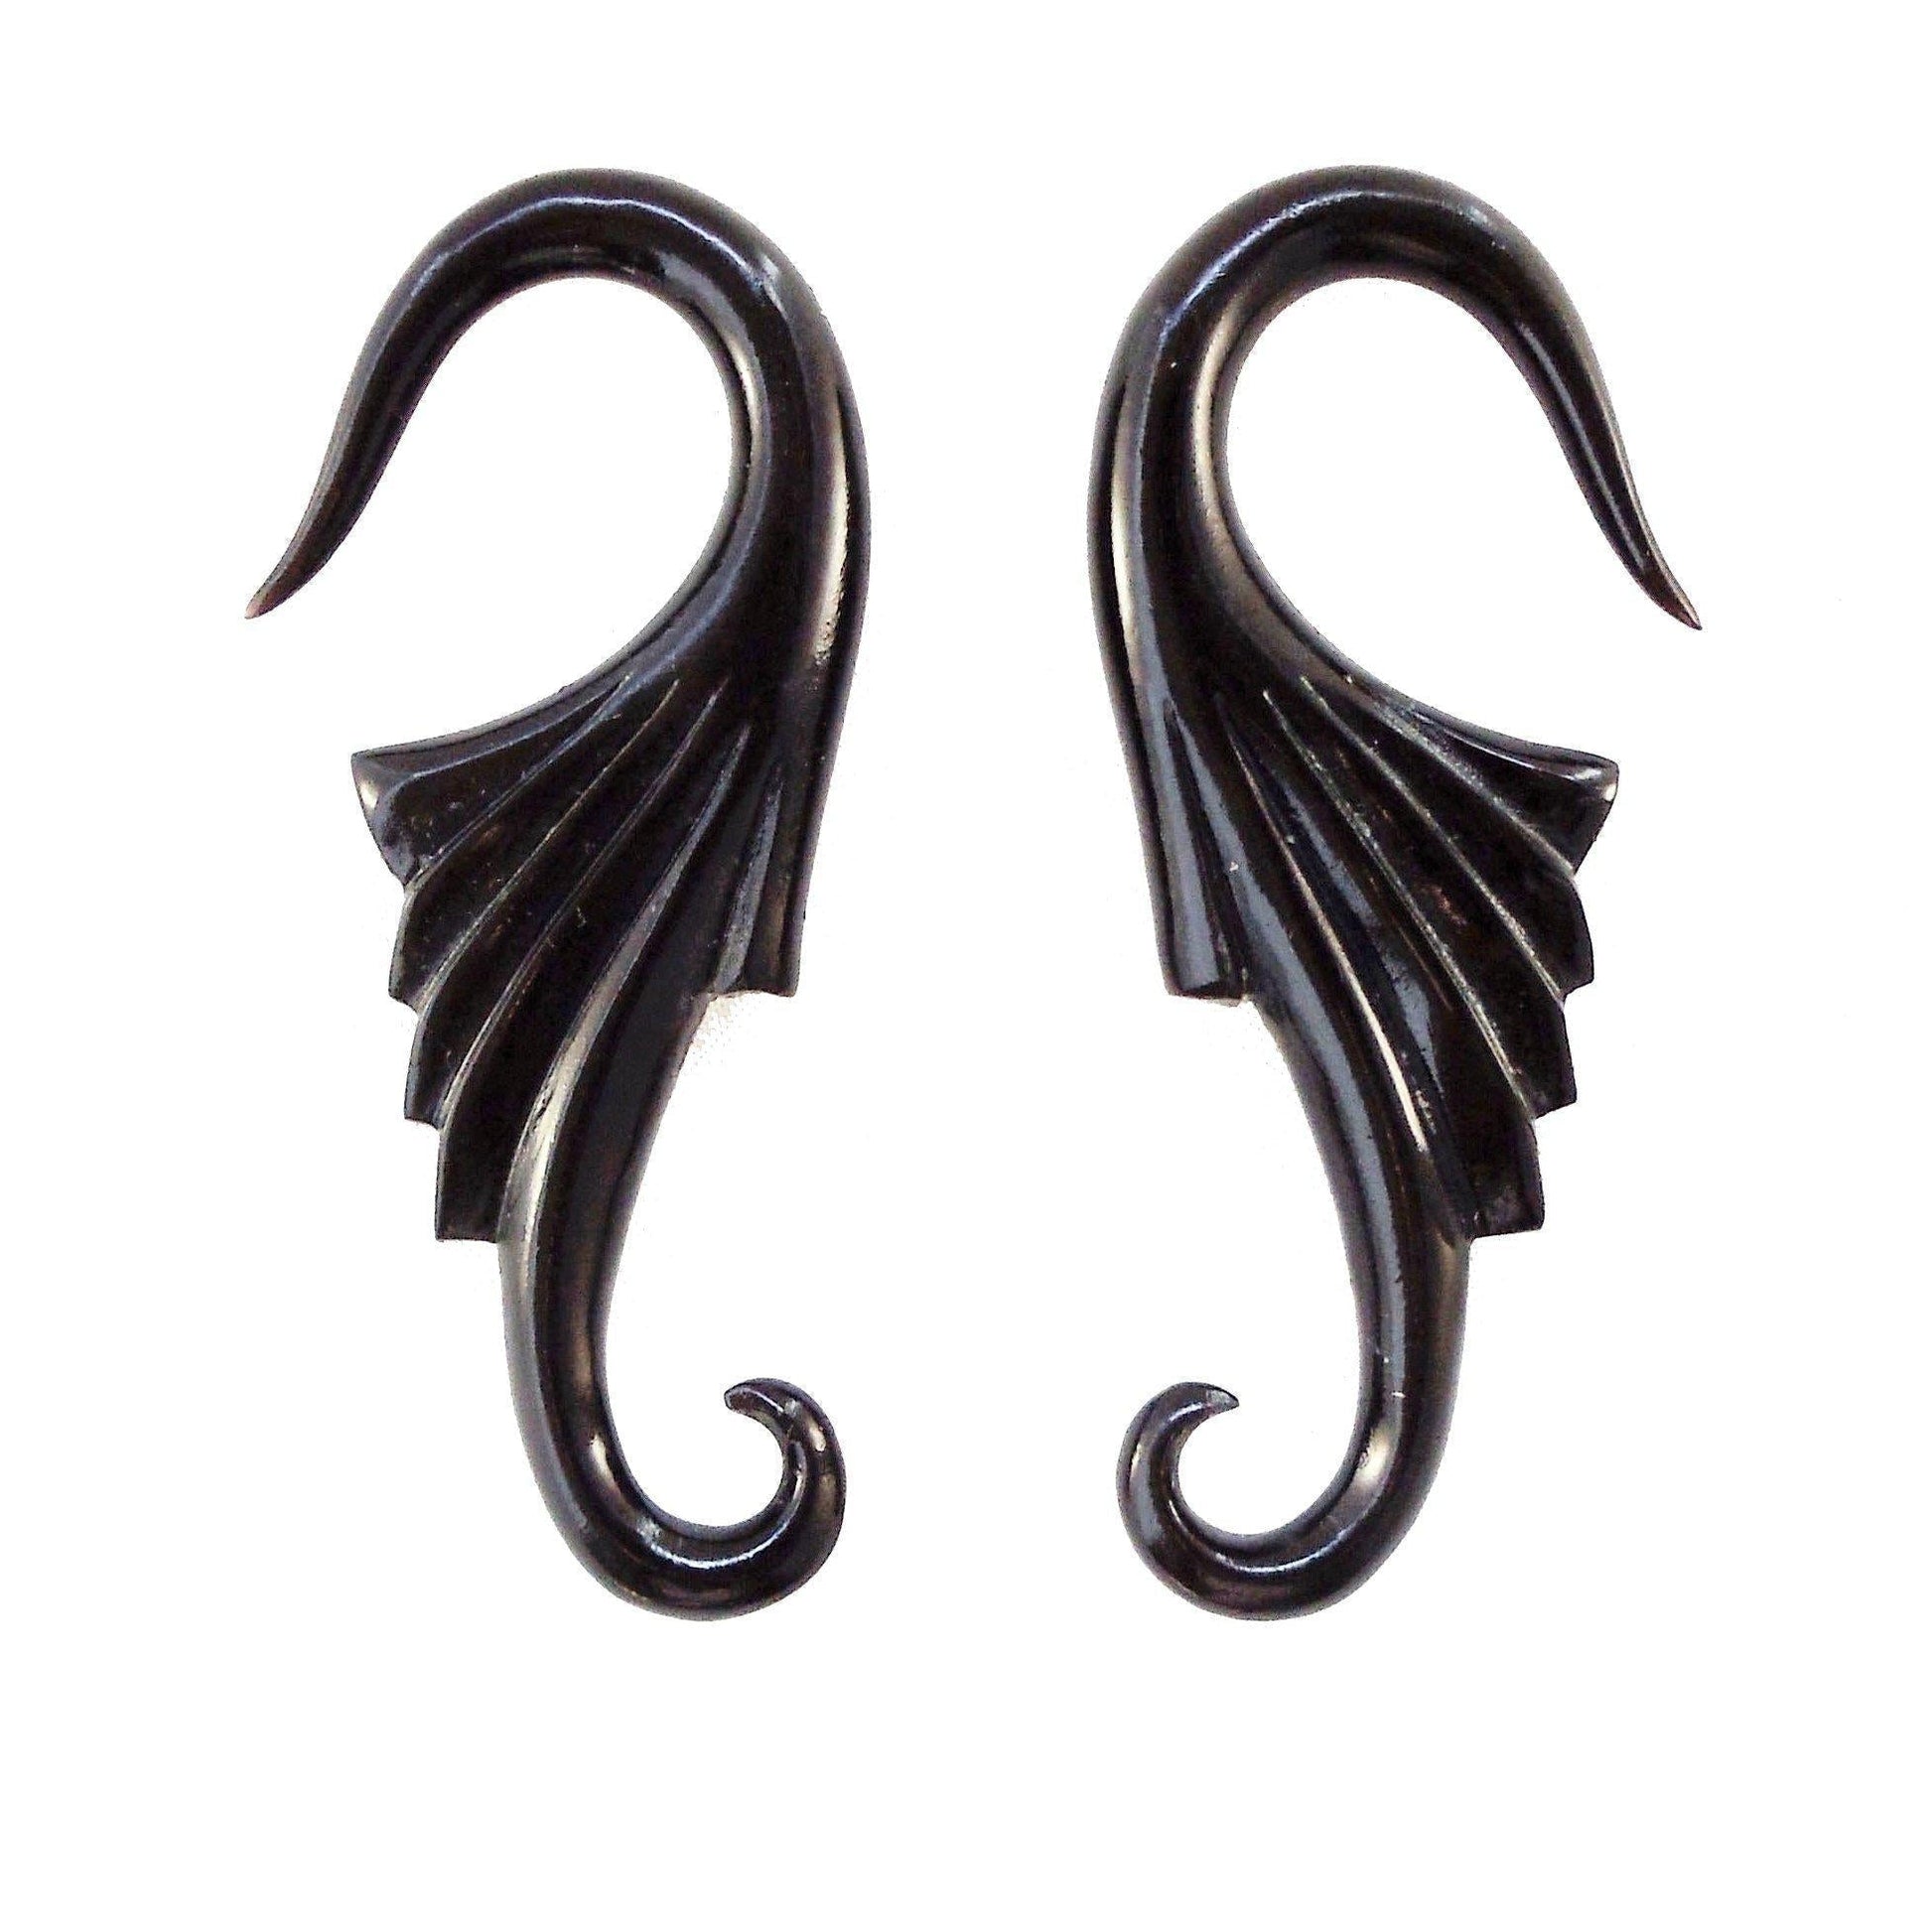 Organic Body Jewelry :|: Nouveau Wings. Horn 6g, Organic Body Jewelry. | Gauges